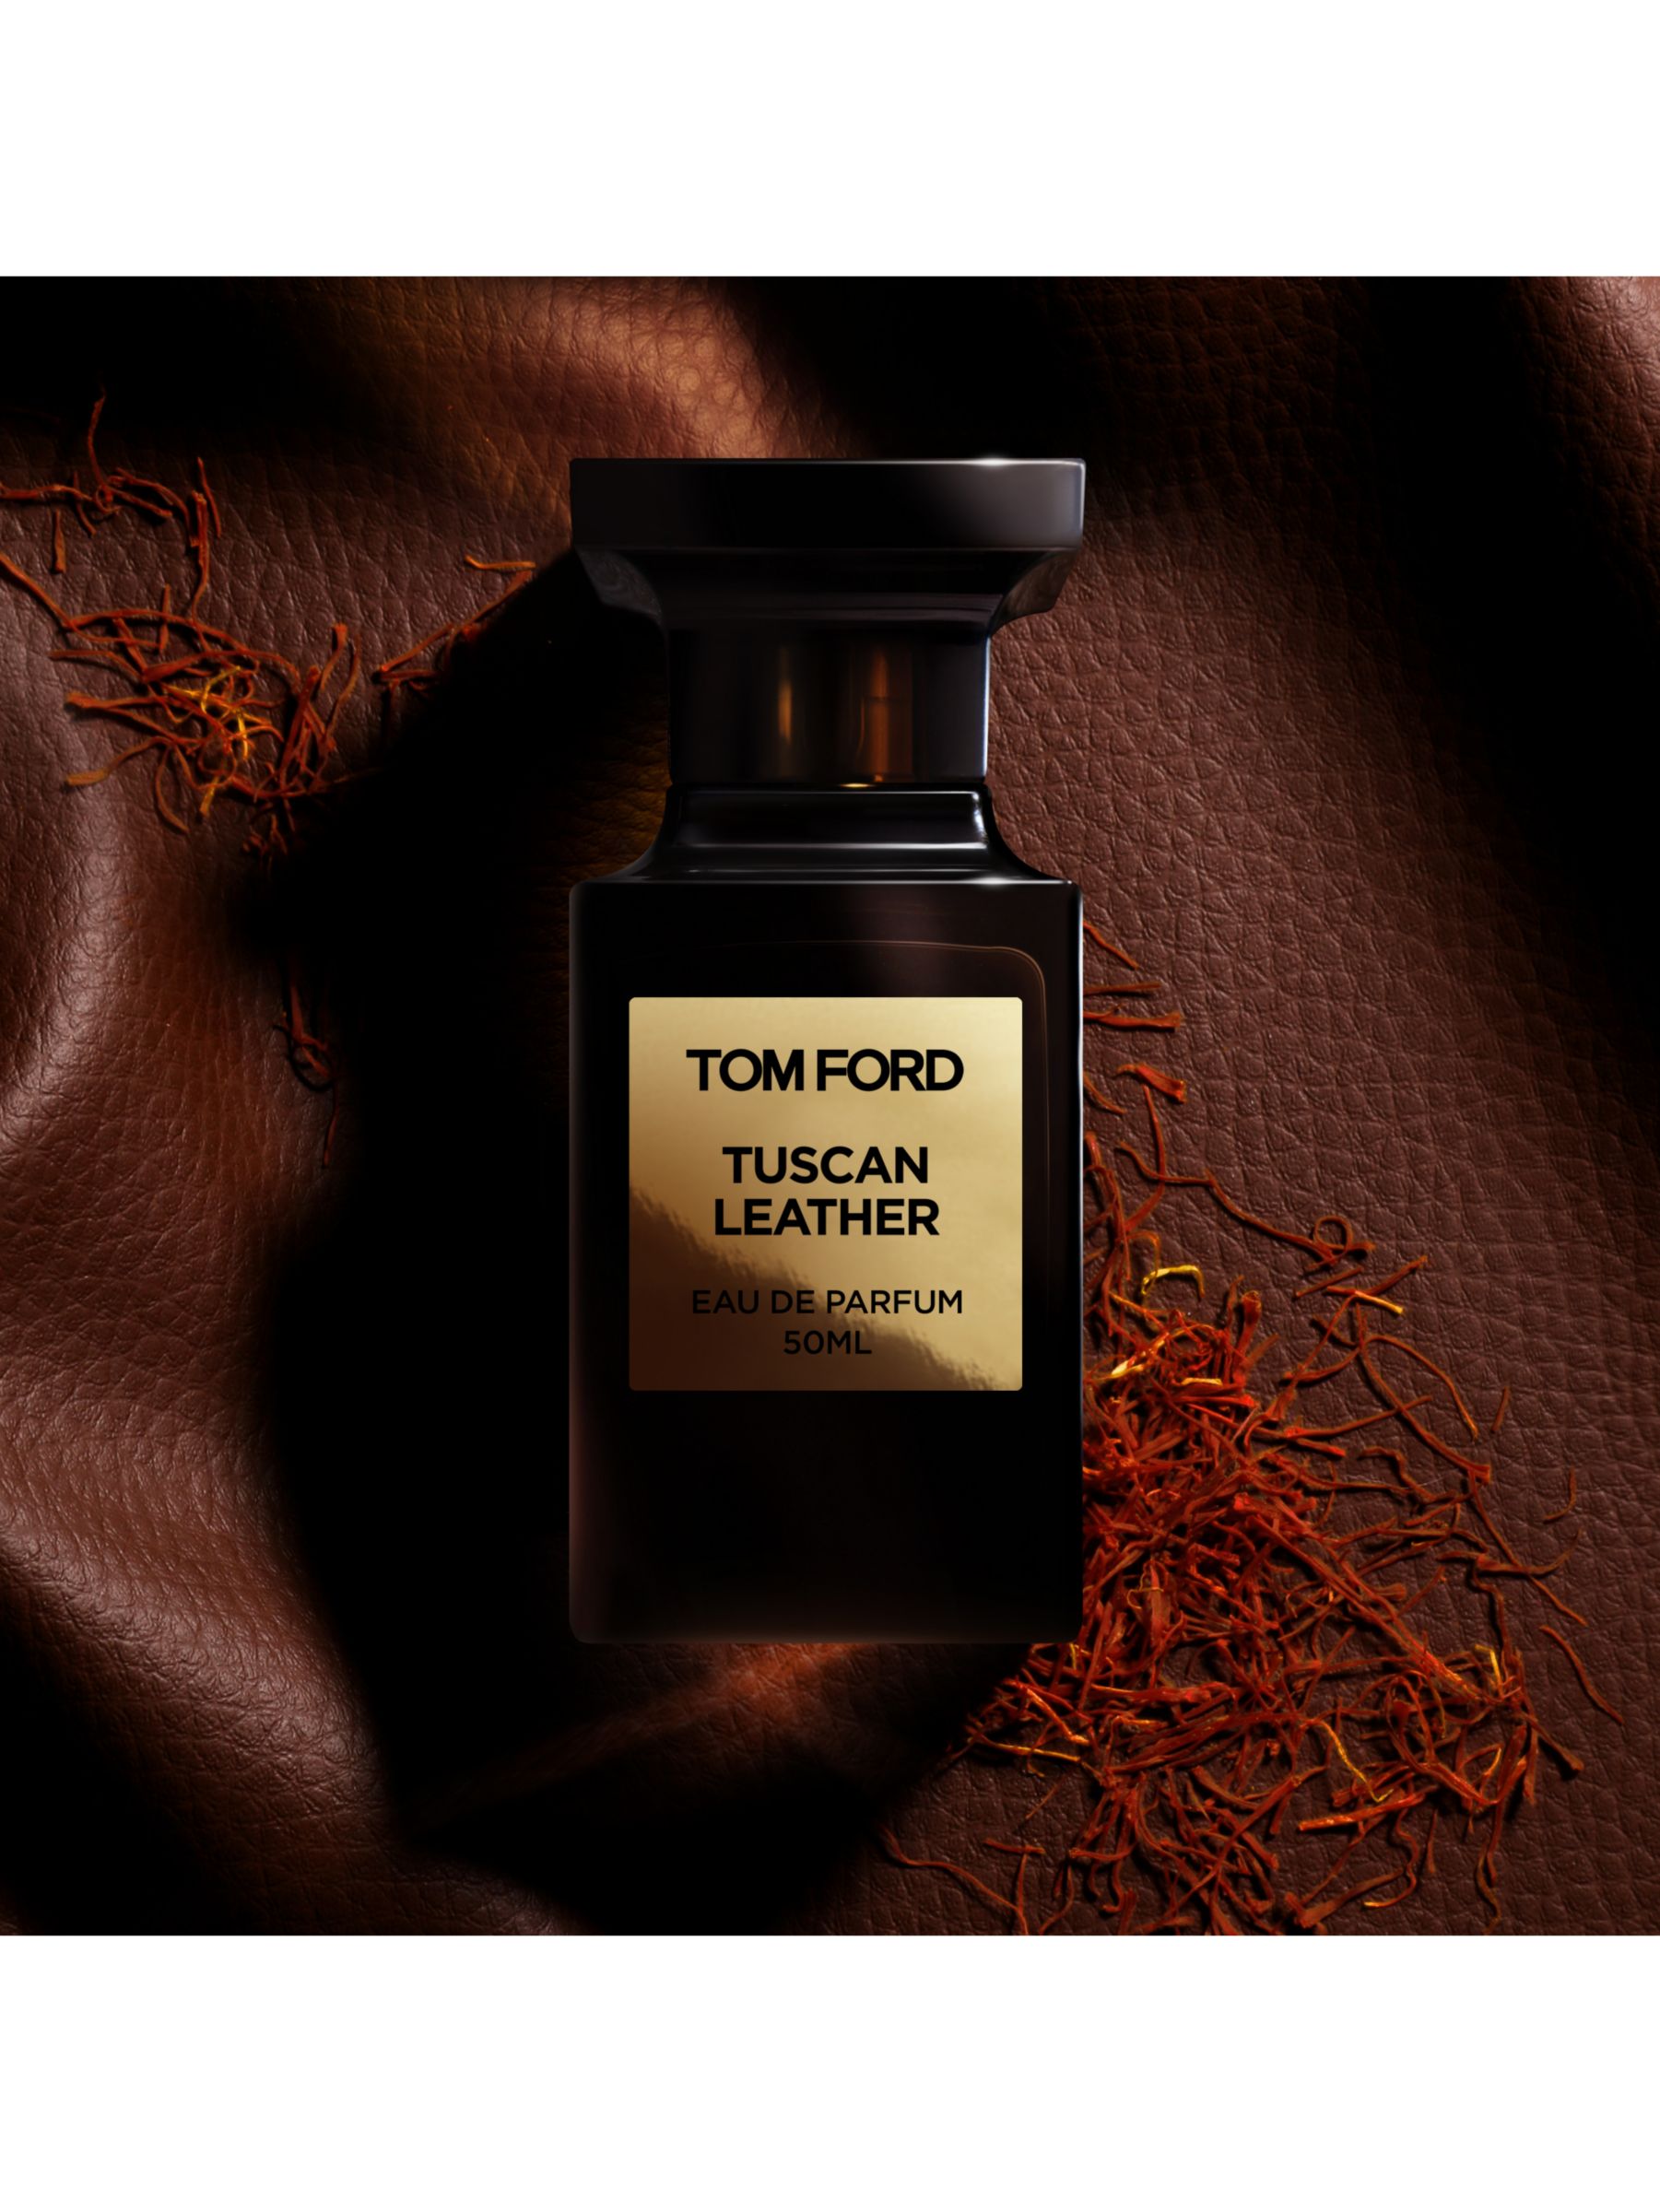 TOM FORD Private Blend Tuscan Leather Eau de Parfum, 50ml at John ...